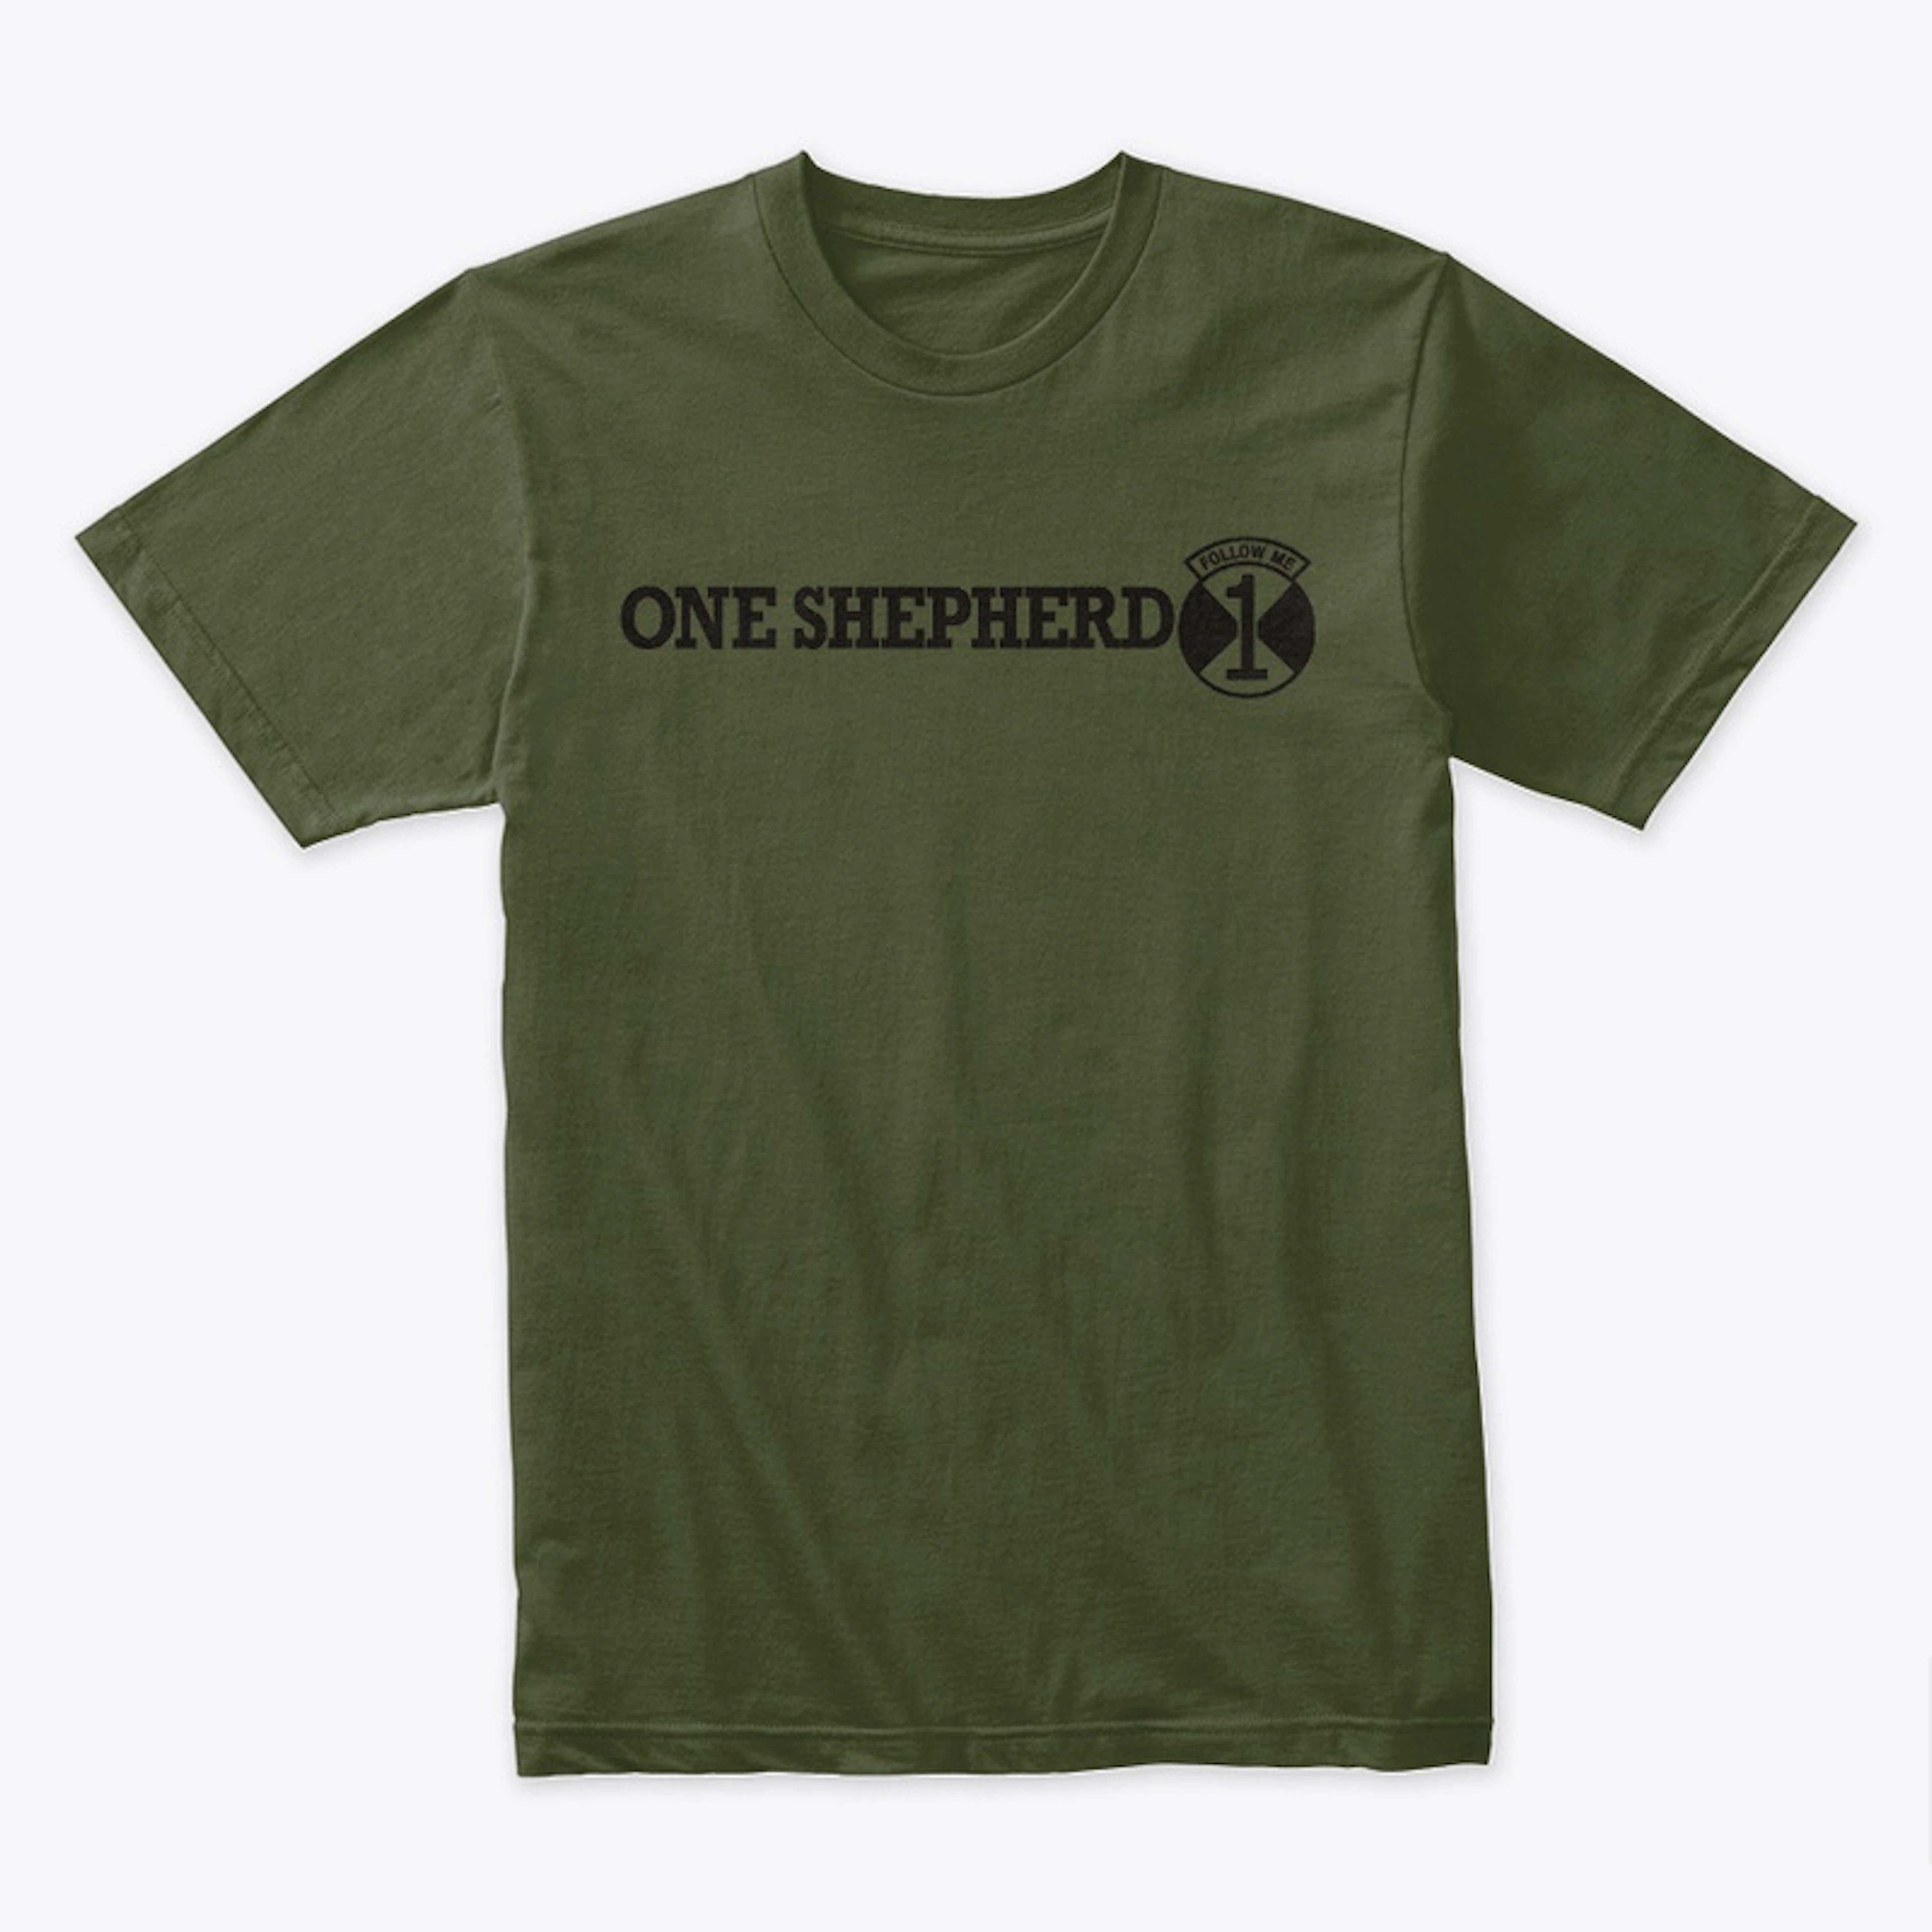 One Shepherd Regiment T-Shirt